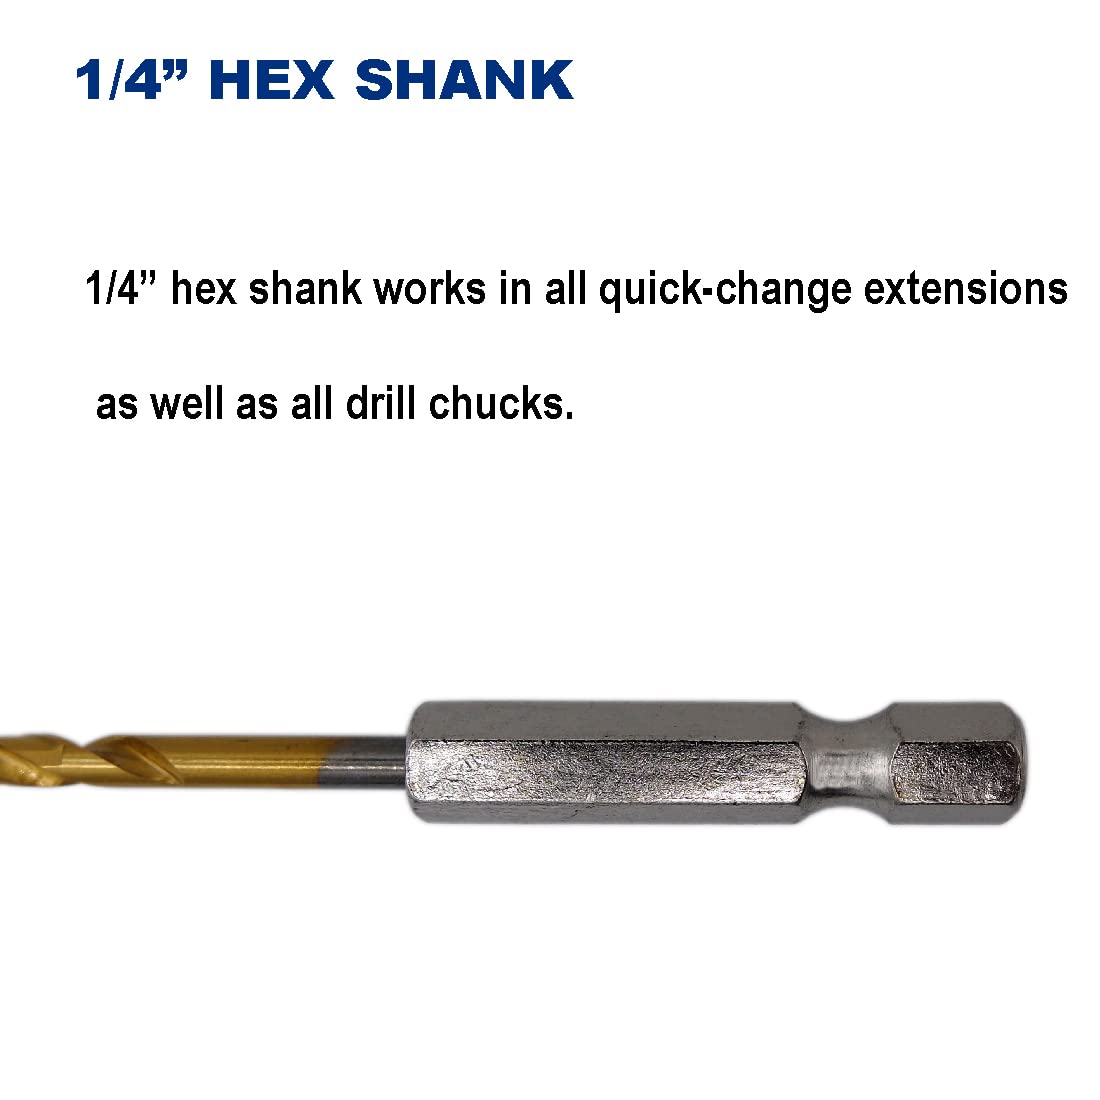 Pack of 6, 7/32-Inch Titanium Nitride Coated Drill Bit, Hex Shank, Premium M2 High Speed Steel, for Metal, Plastic, Wood